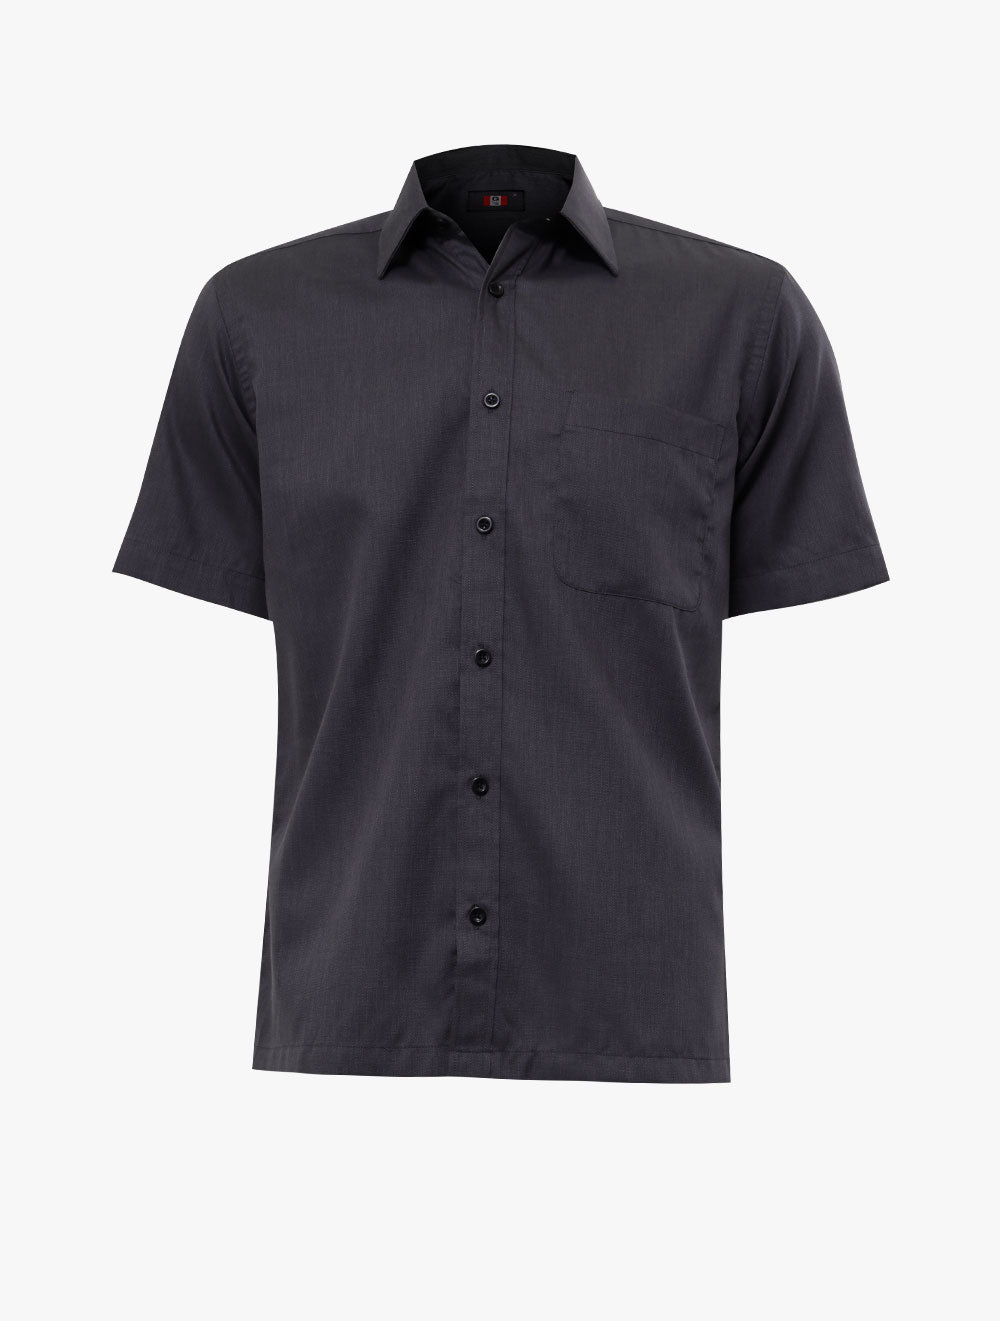 GQ
Casual Short Sleeve Shirt 1622302XXL13